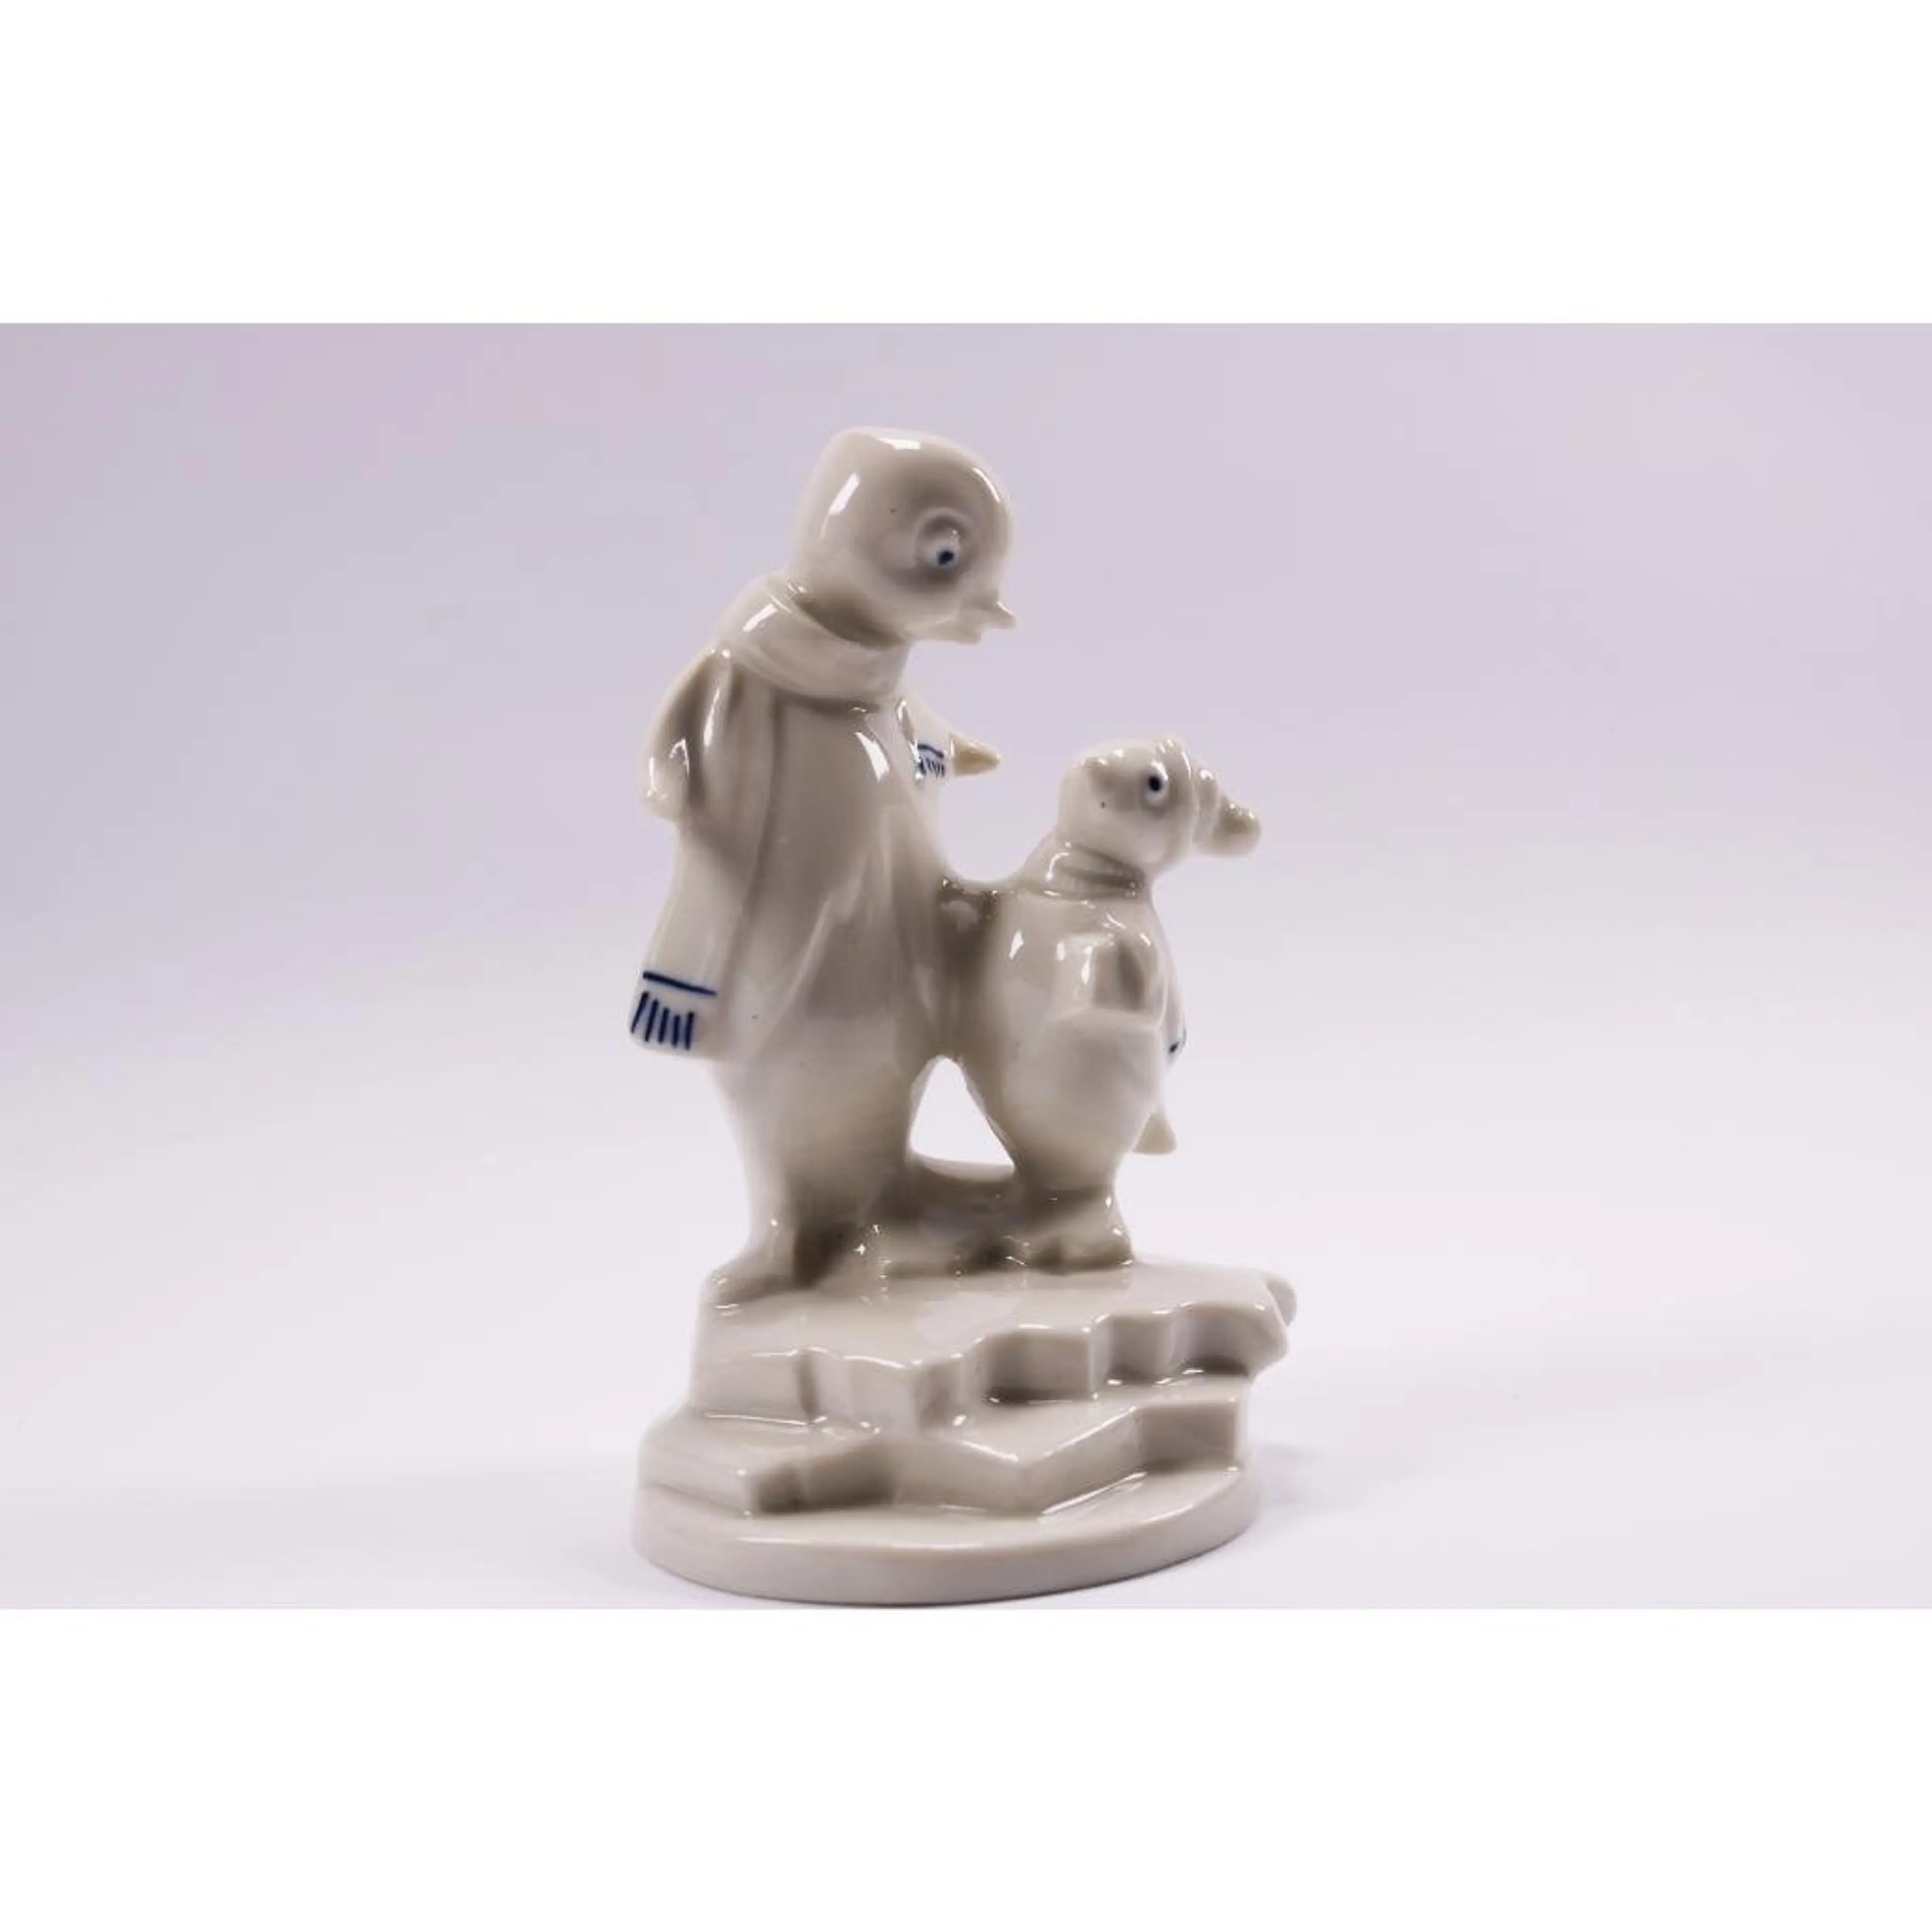 Penguin Figurine Stamped Made In Spain Collectors Item Fine Porcelain Gift Idea